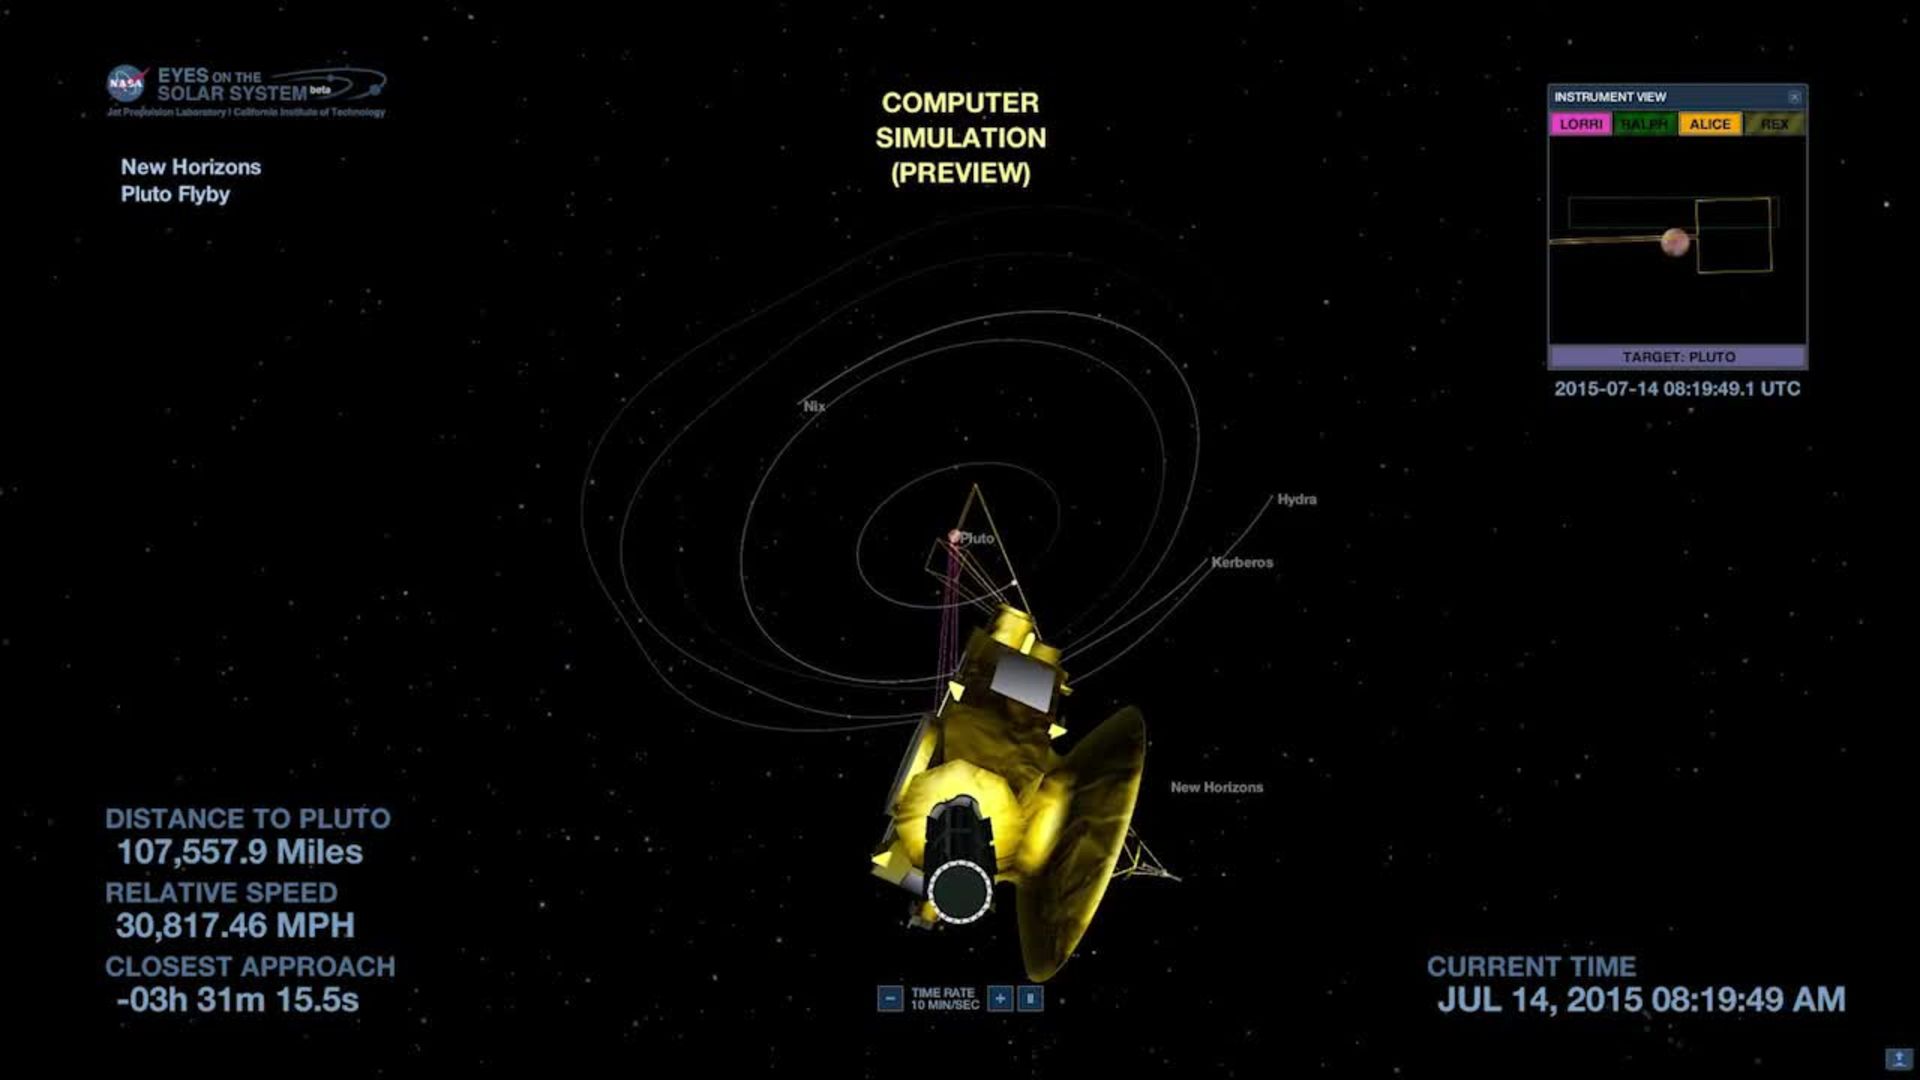 Watch NASA's Simulator Puts All Eyes on Pluto